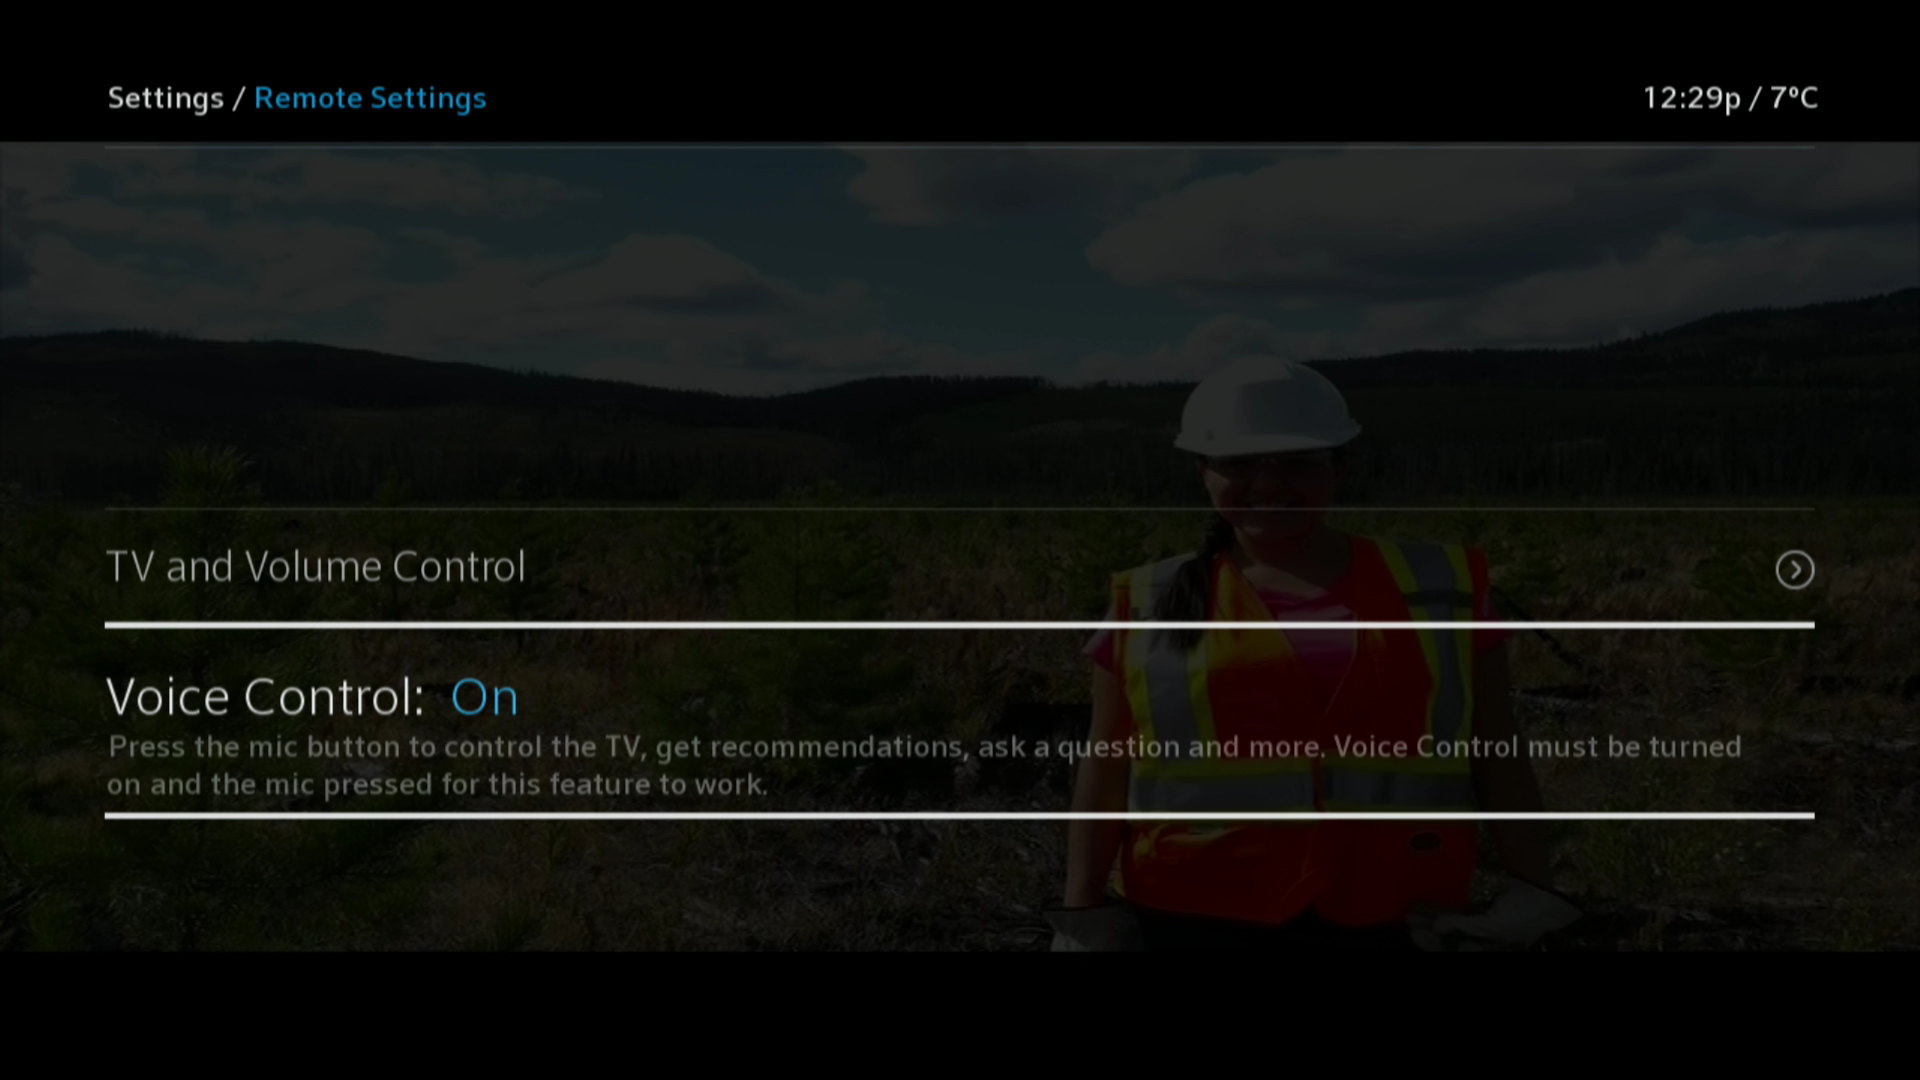 BlueCurve TV Remote Settings > Voice Control On